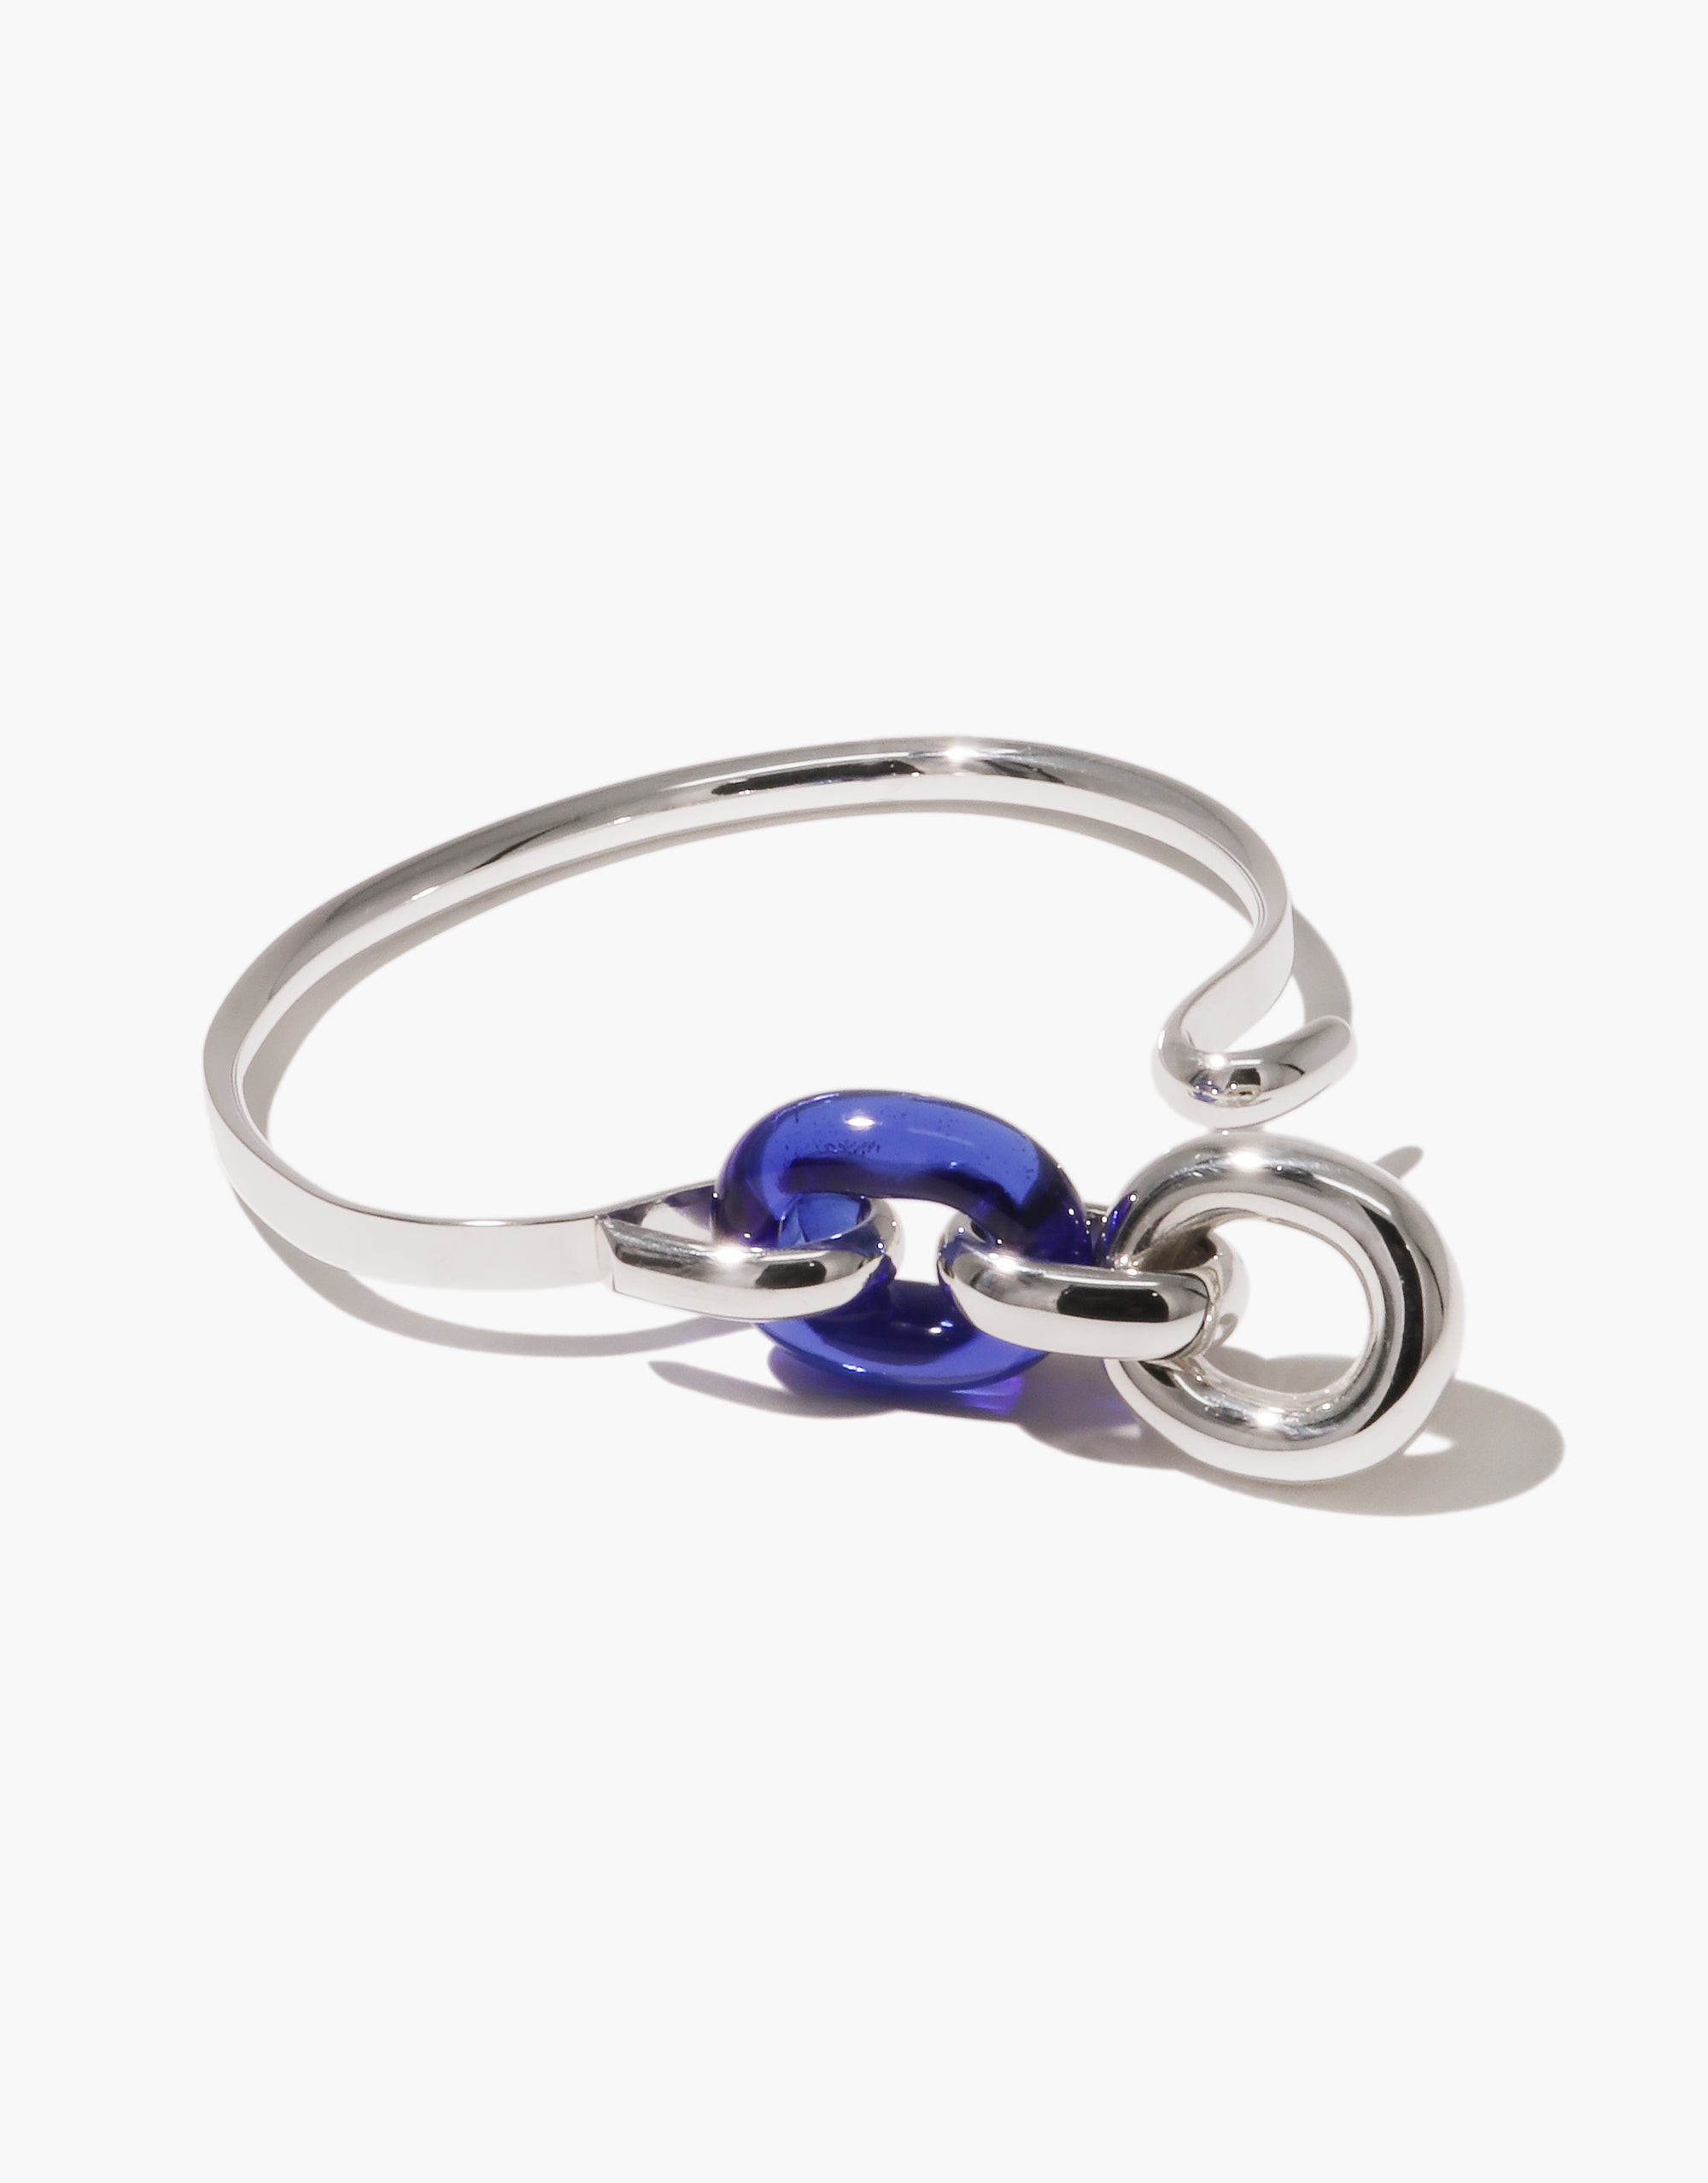 Lovers Loop Hook Bracelet - SPECIAL ORDER - Local Color / Commotion